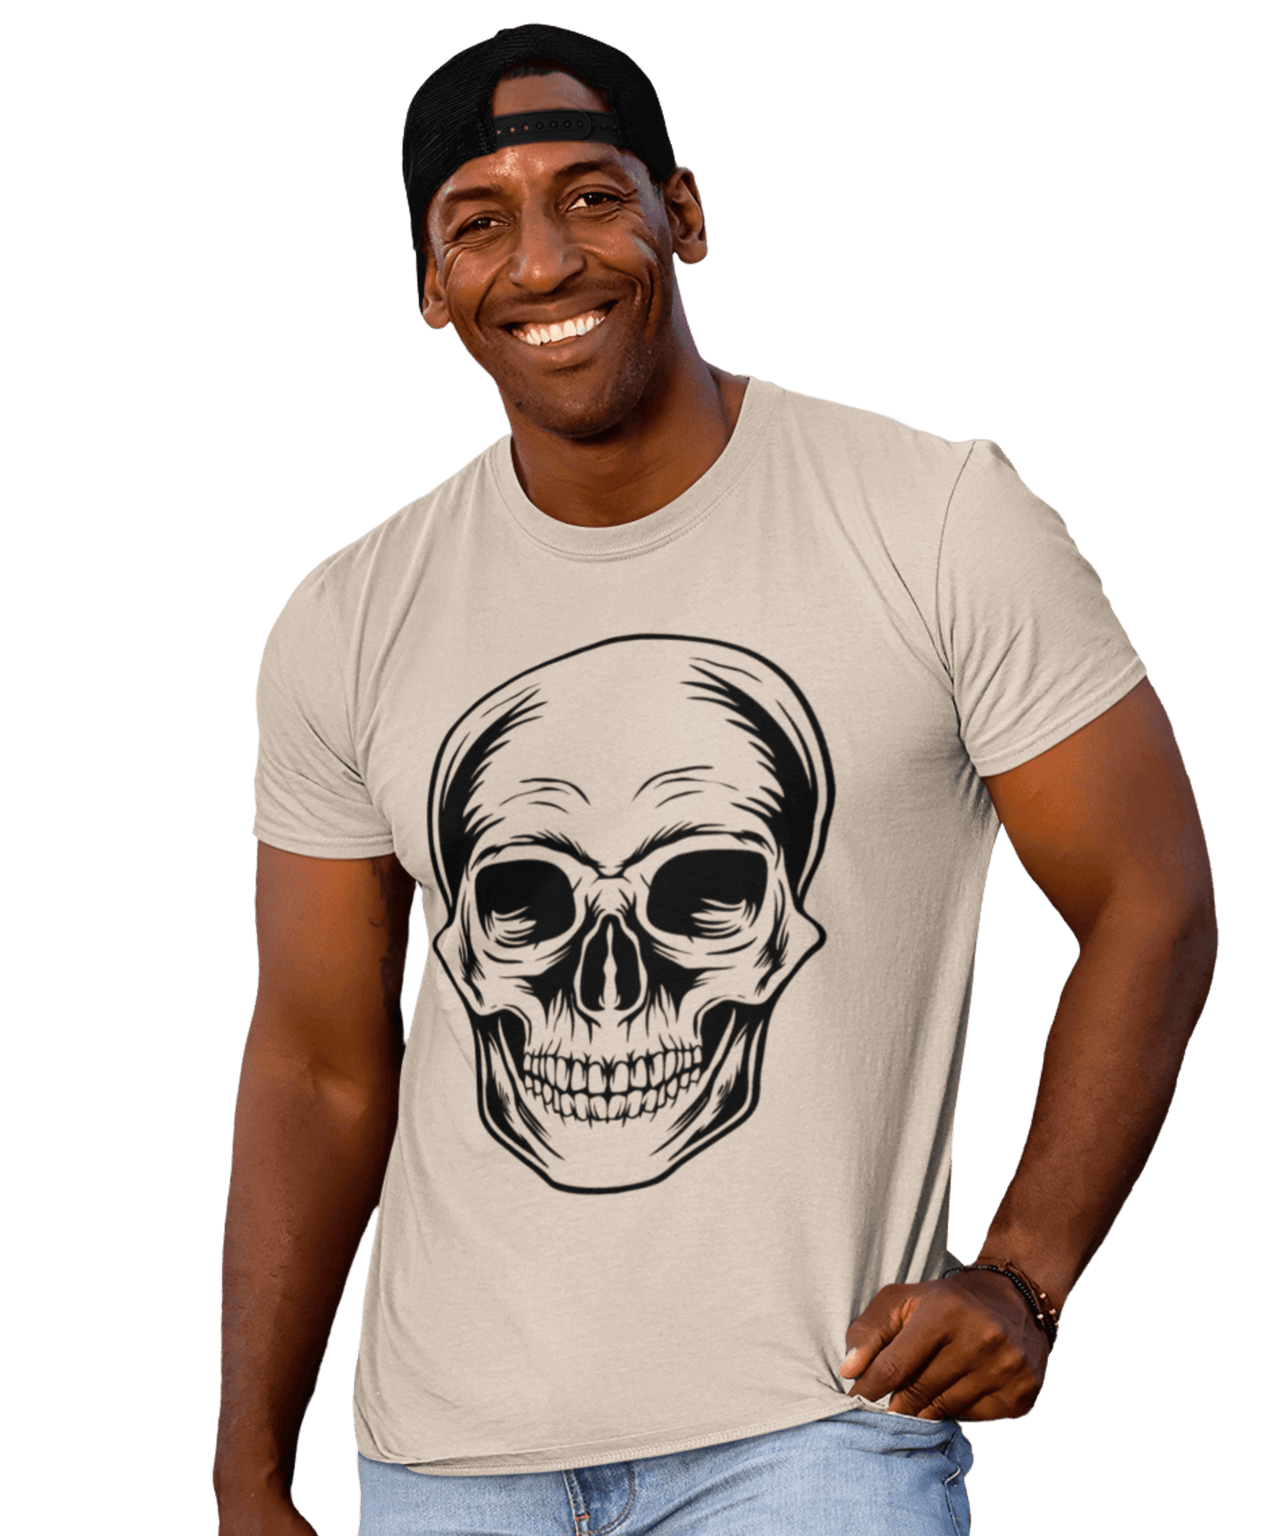 Large Skull Tattoo Design Adult Unisex Mens Graphic T-Shirt 8Ball